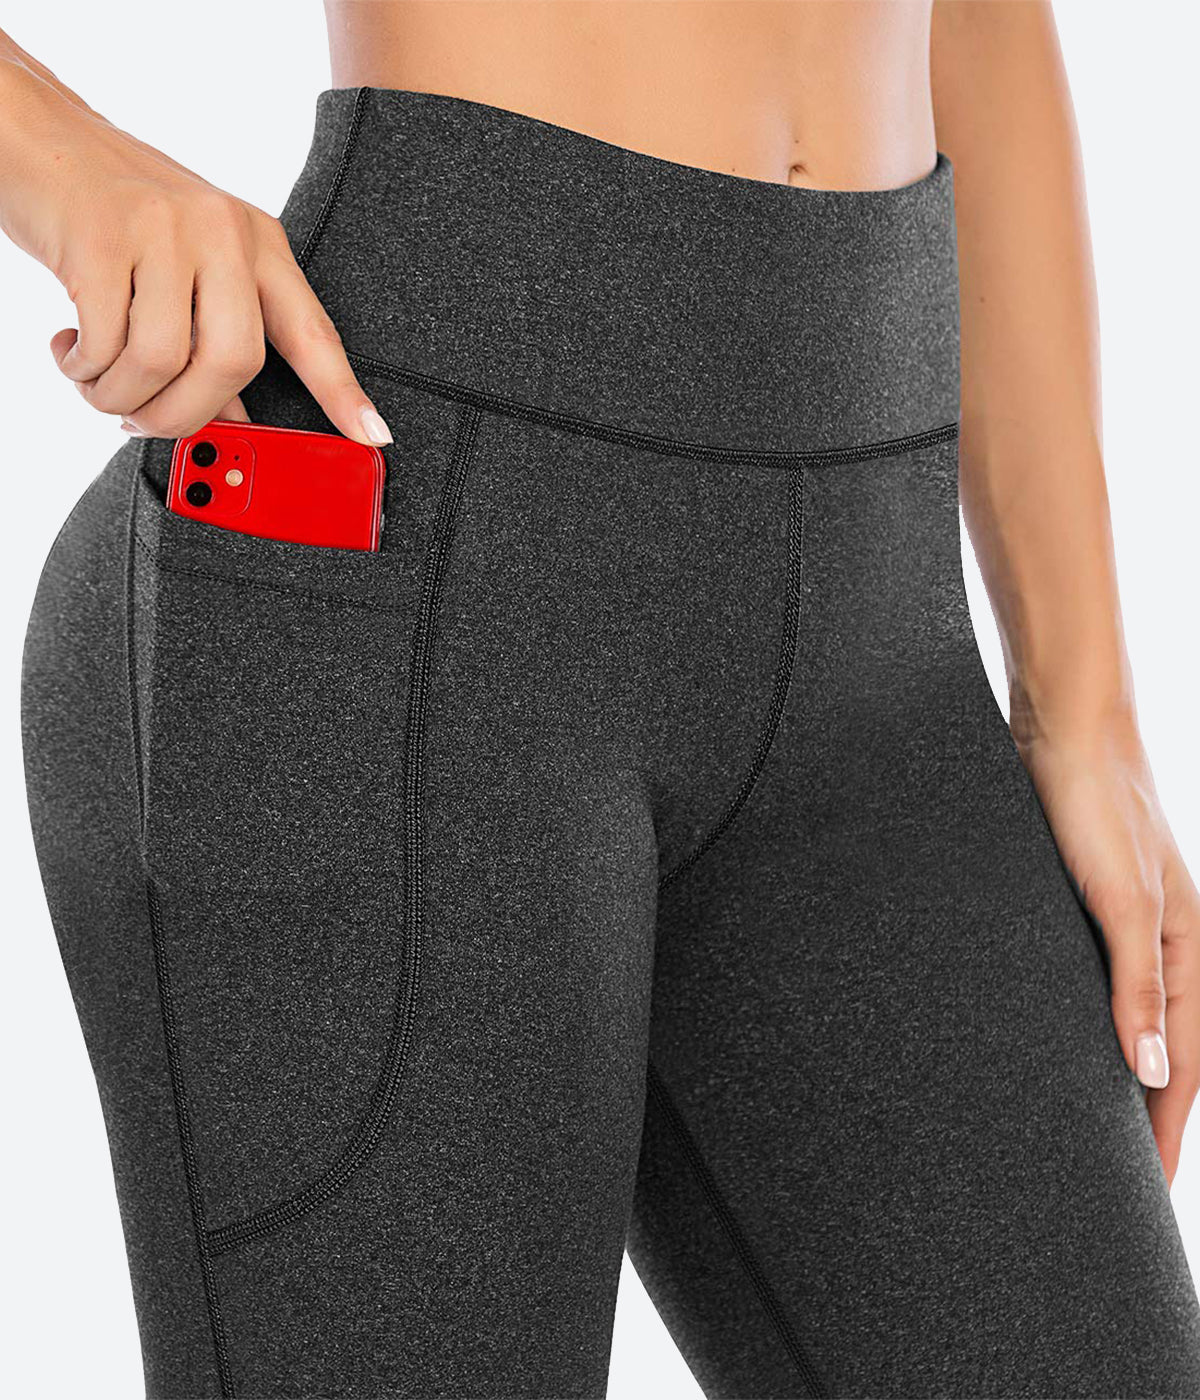 Buy puutiin Women's Bootcut Yoga Pants Long Workout Bootleg Pants High  Waist Running Leggings(Black, M) at Amazon.in